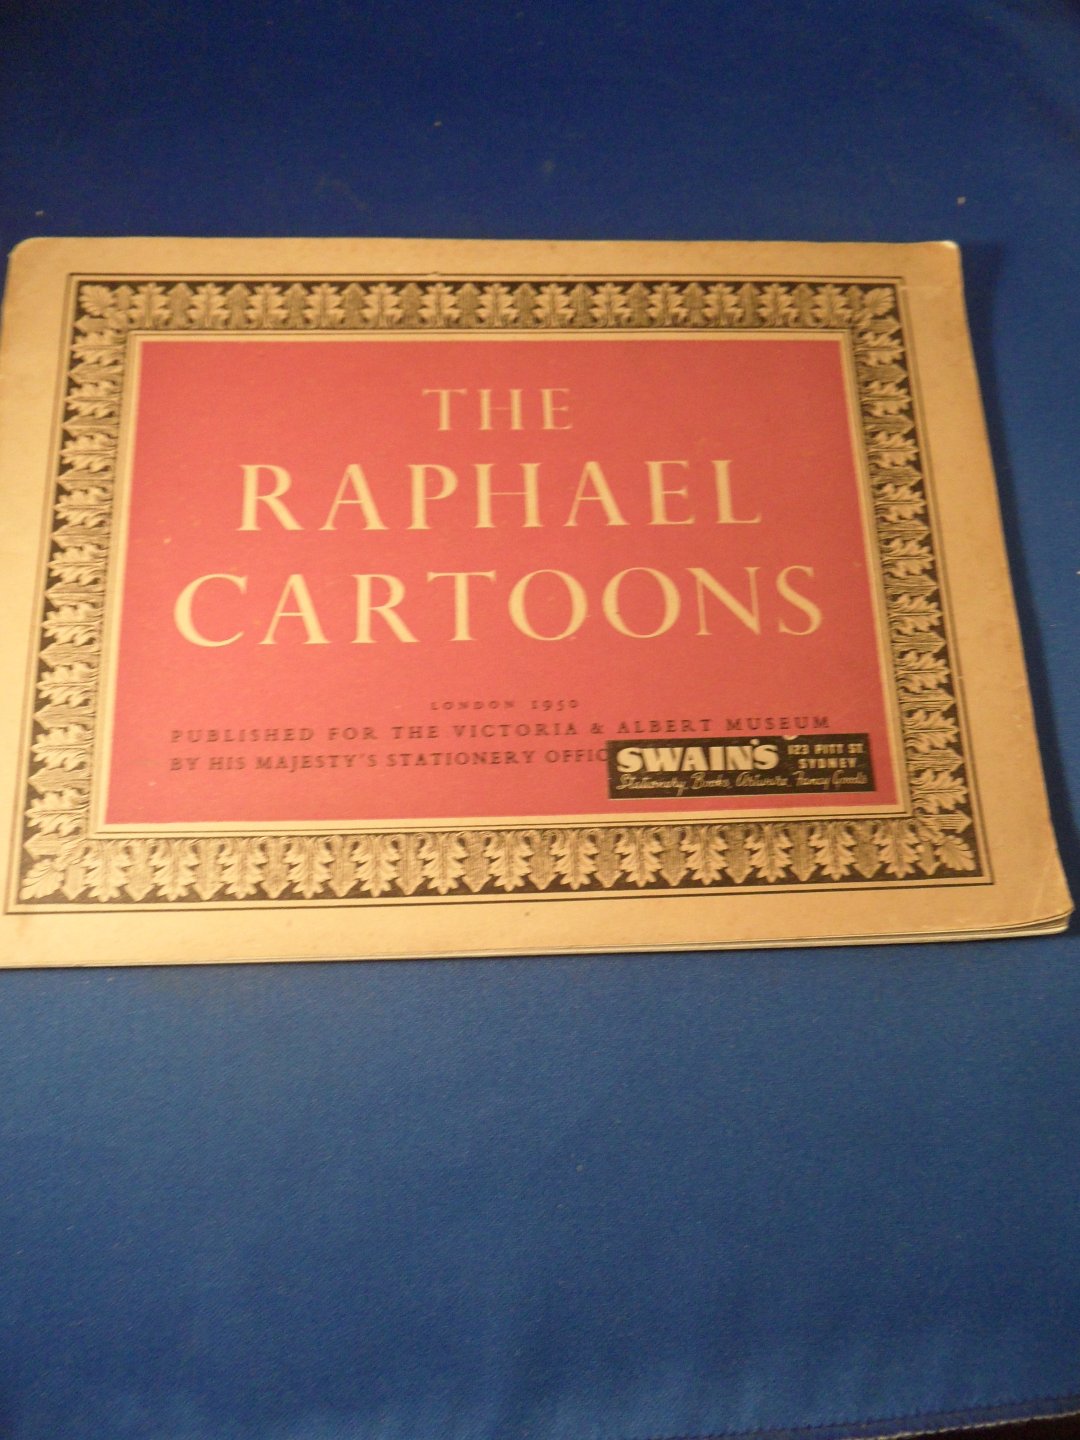 Pope-Hennessy, John - The Raphael cartoons. Victoria and Albert museum